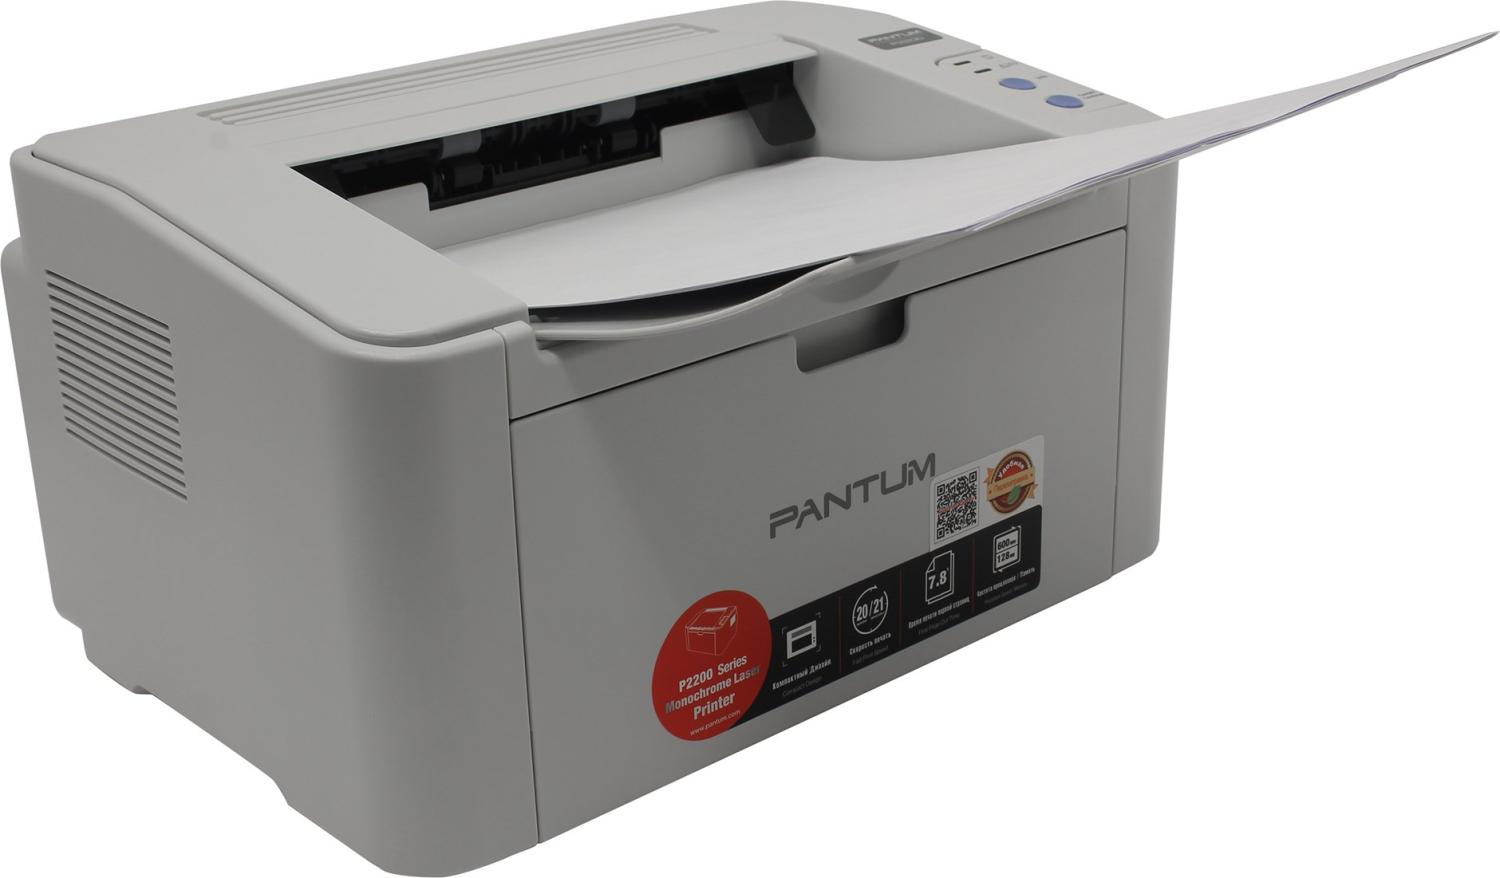 P2200 series драйвер. Принтер лазерный Pantum p2200. Принтер лазерный Pantum p2518. Принтер лазерный Pantum p2516. Пантум 2200.